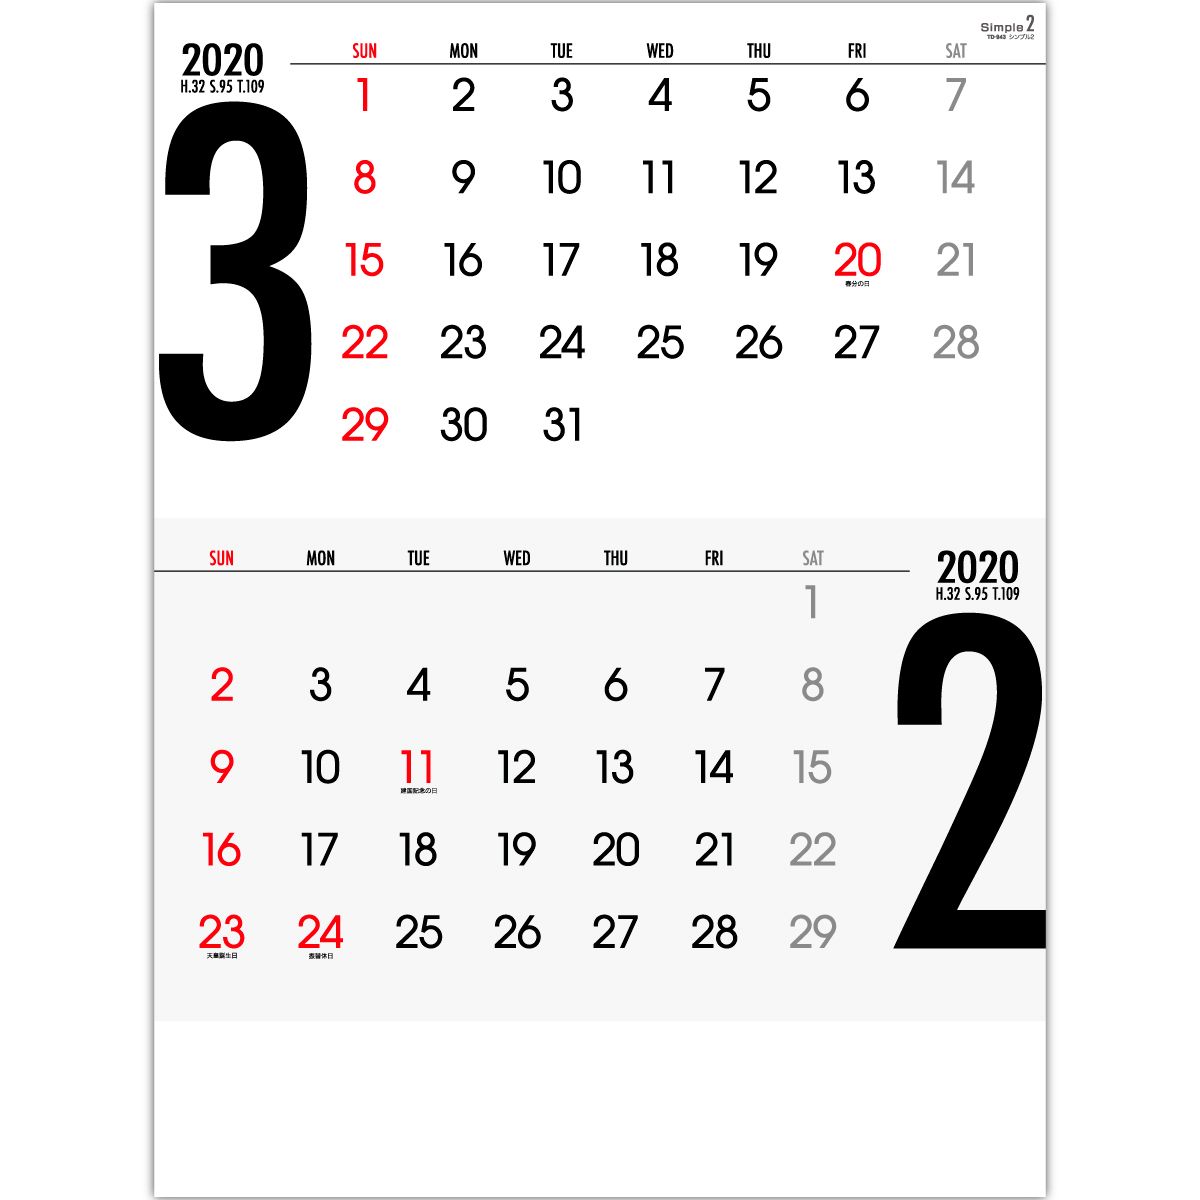 Td943 シンプル2 15ヶ月 2020年カレンダー 文字月表 イラスト